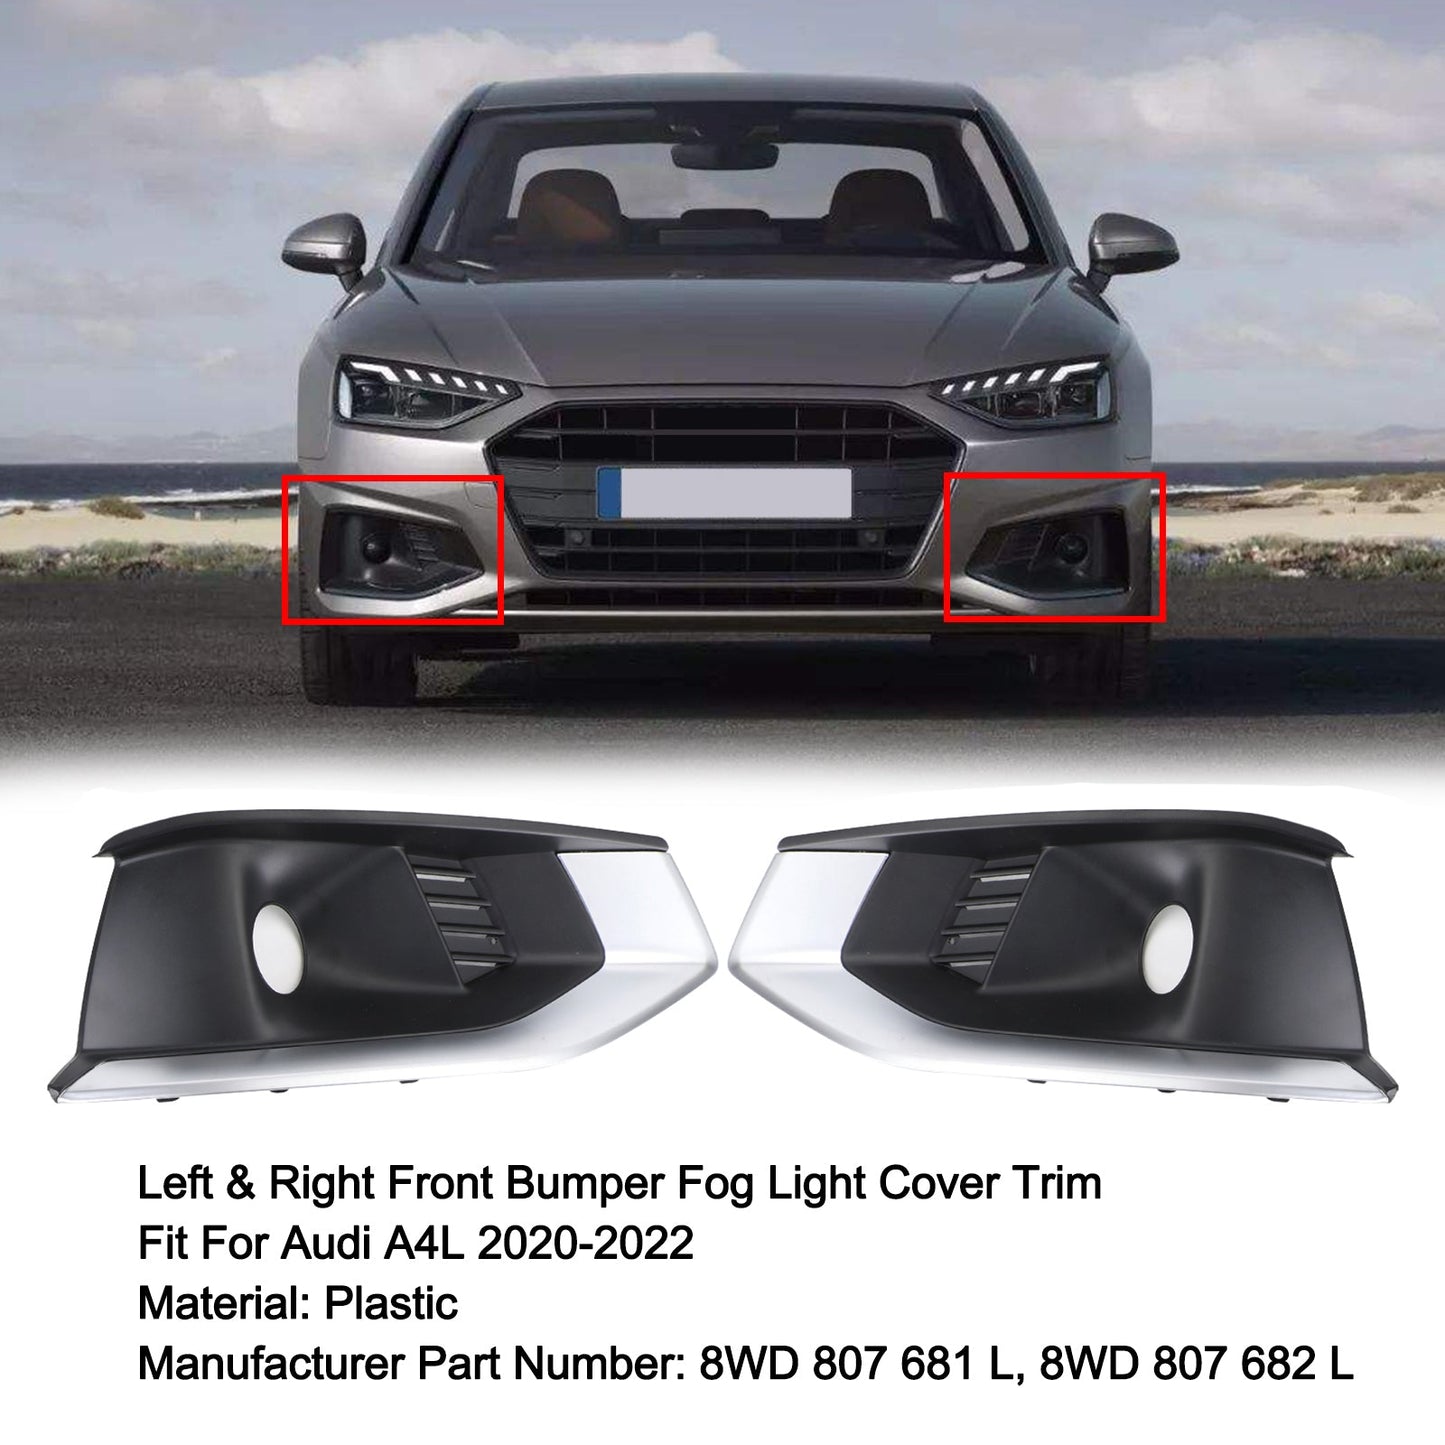 Left & Right Front Bumper Fog Light Grille Cover Trim For Audi A4L 2020-2022